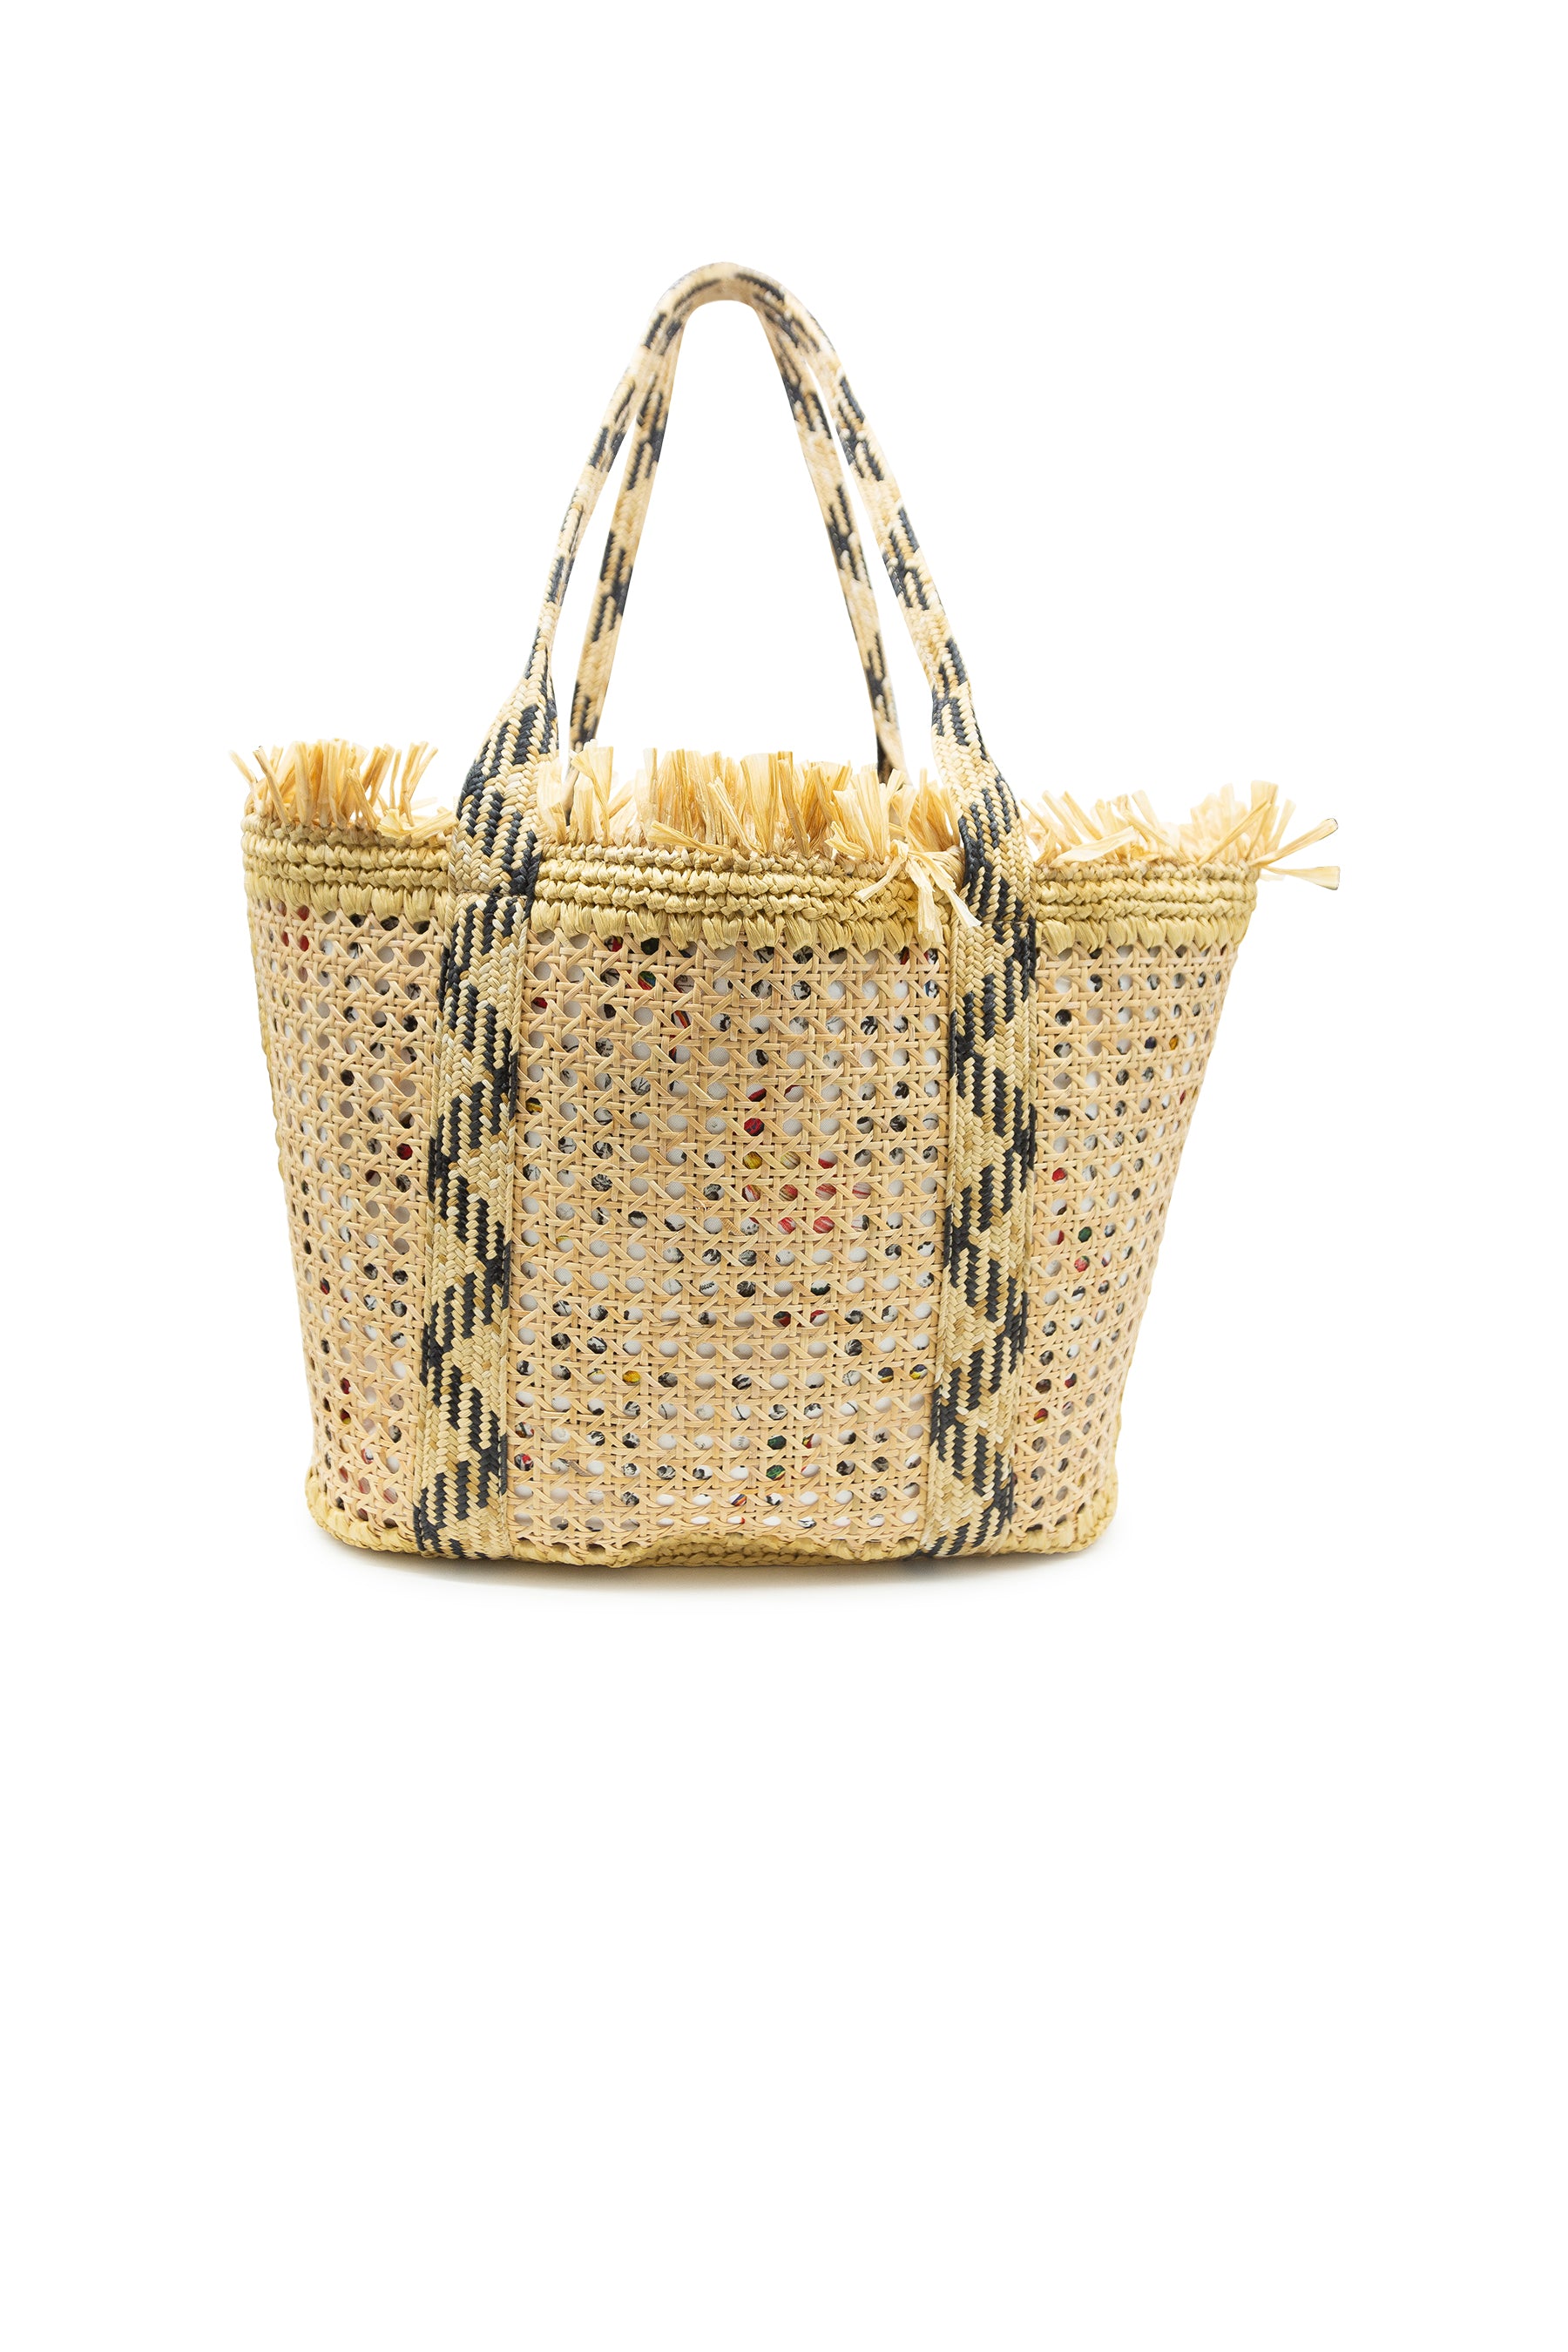 Erdem Large Straw Bag  (est. retail $760) – Dora Maar